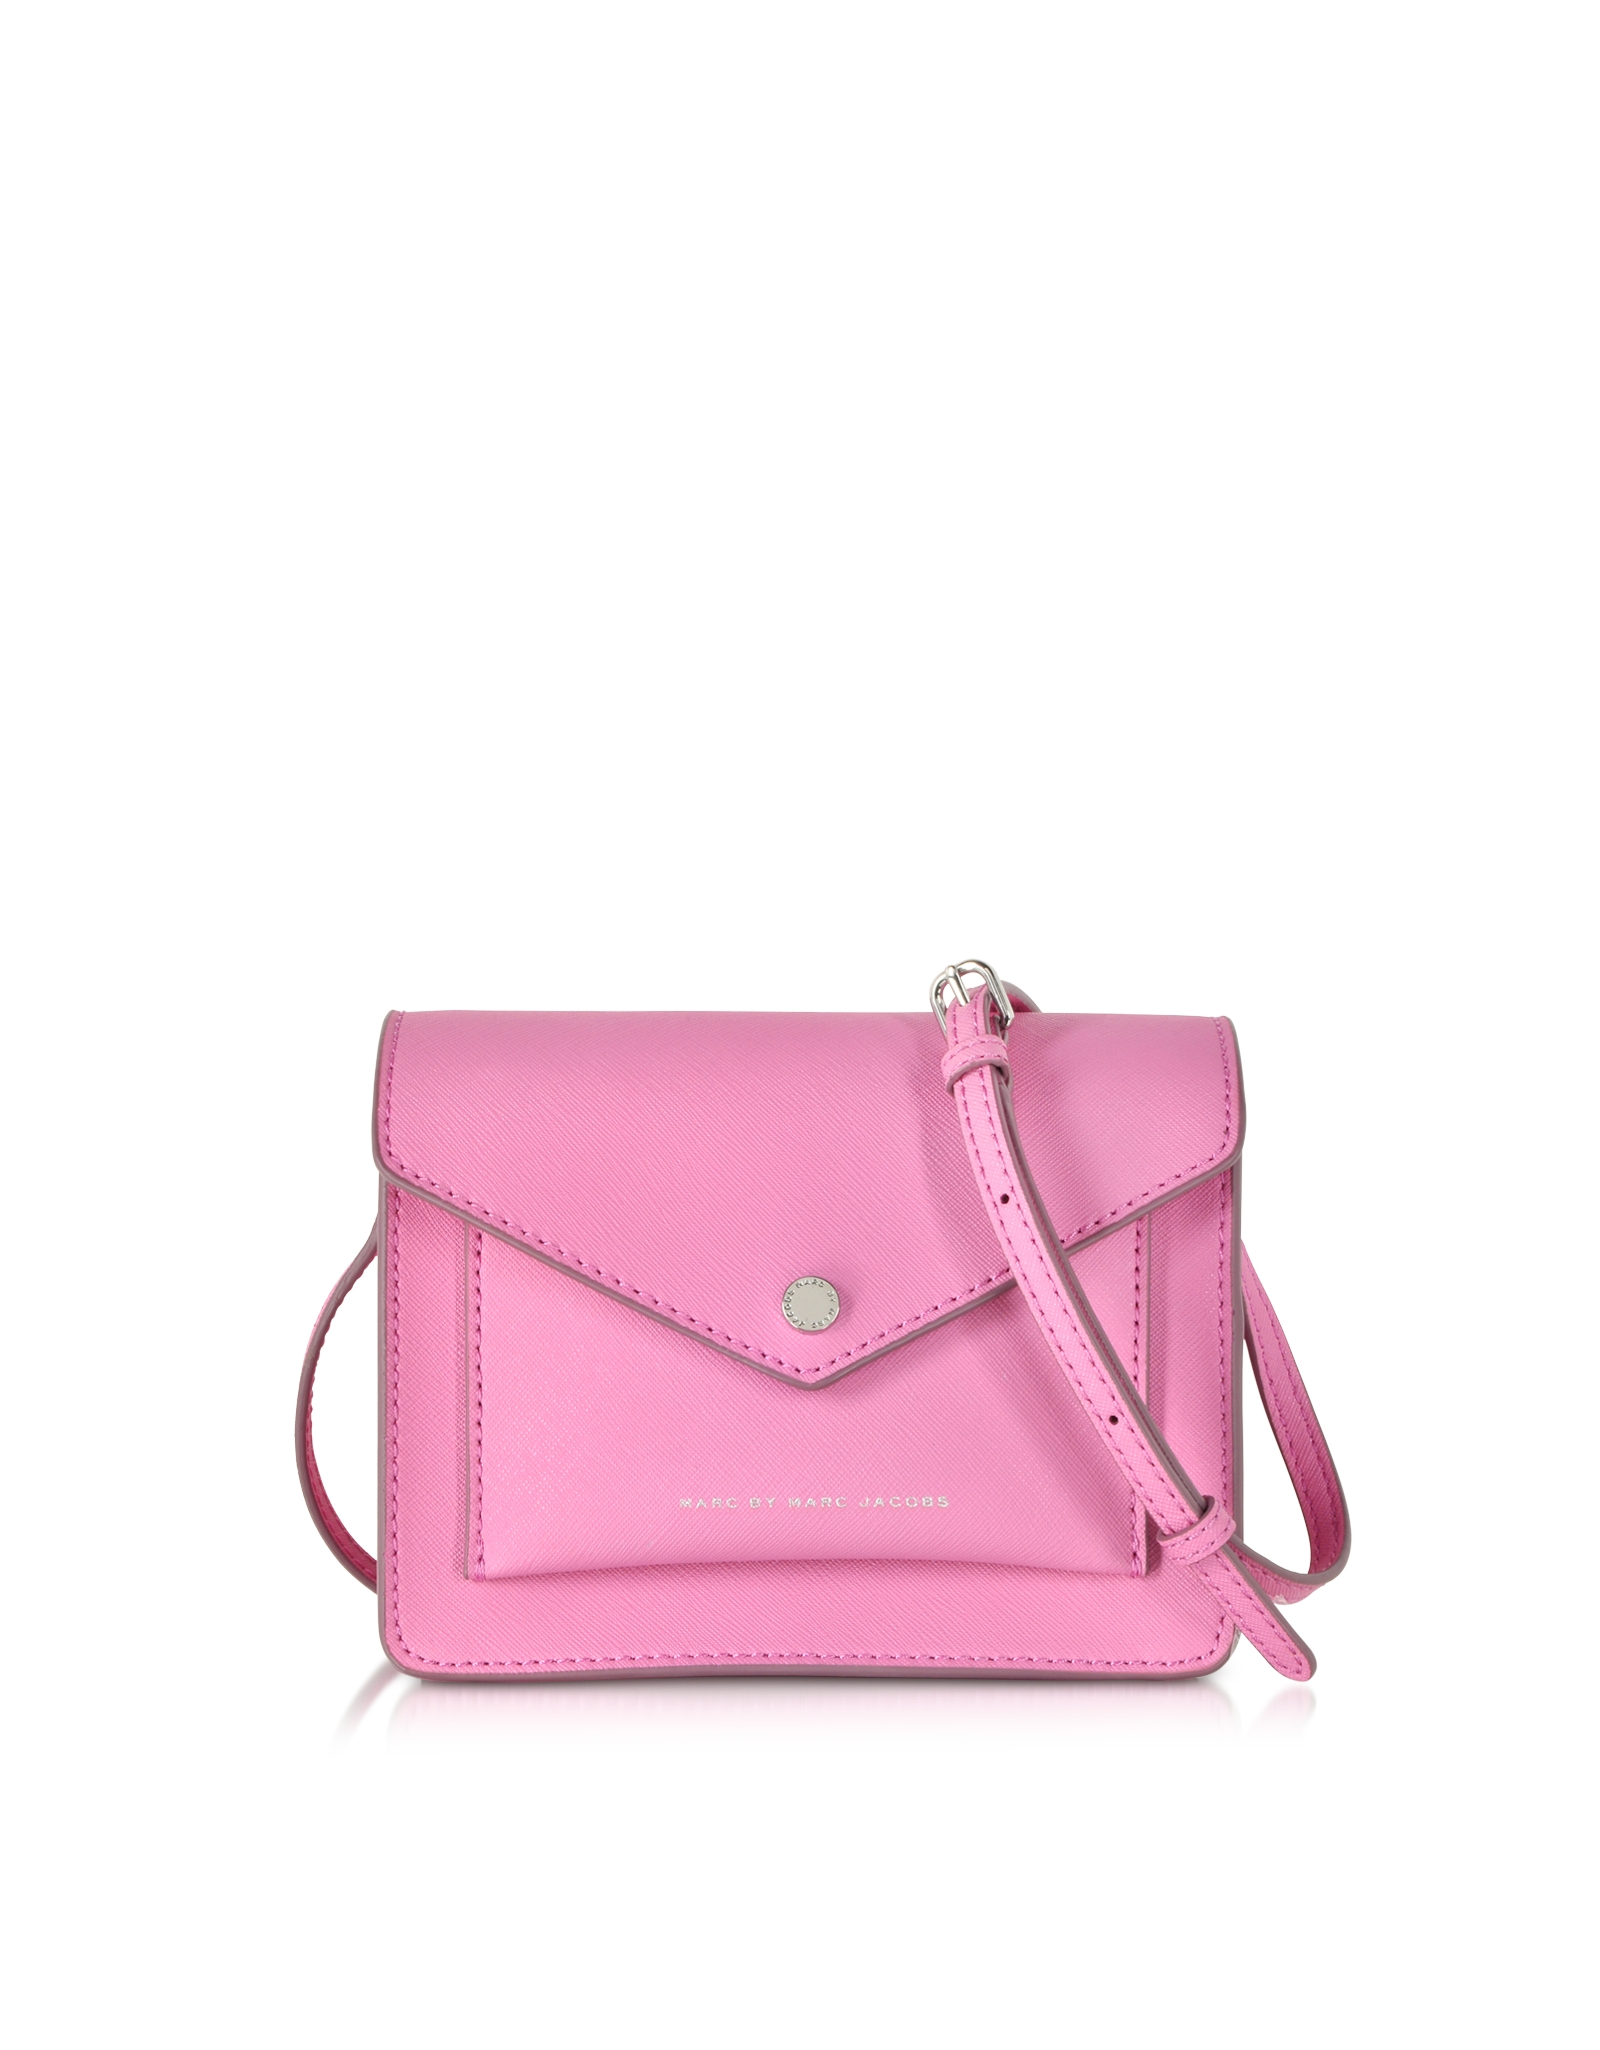 Lyst - Marc By Marc Jacobs Metropoli Pink Bubblegum Crossbody Bag in Pink